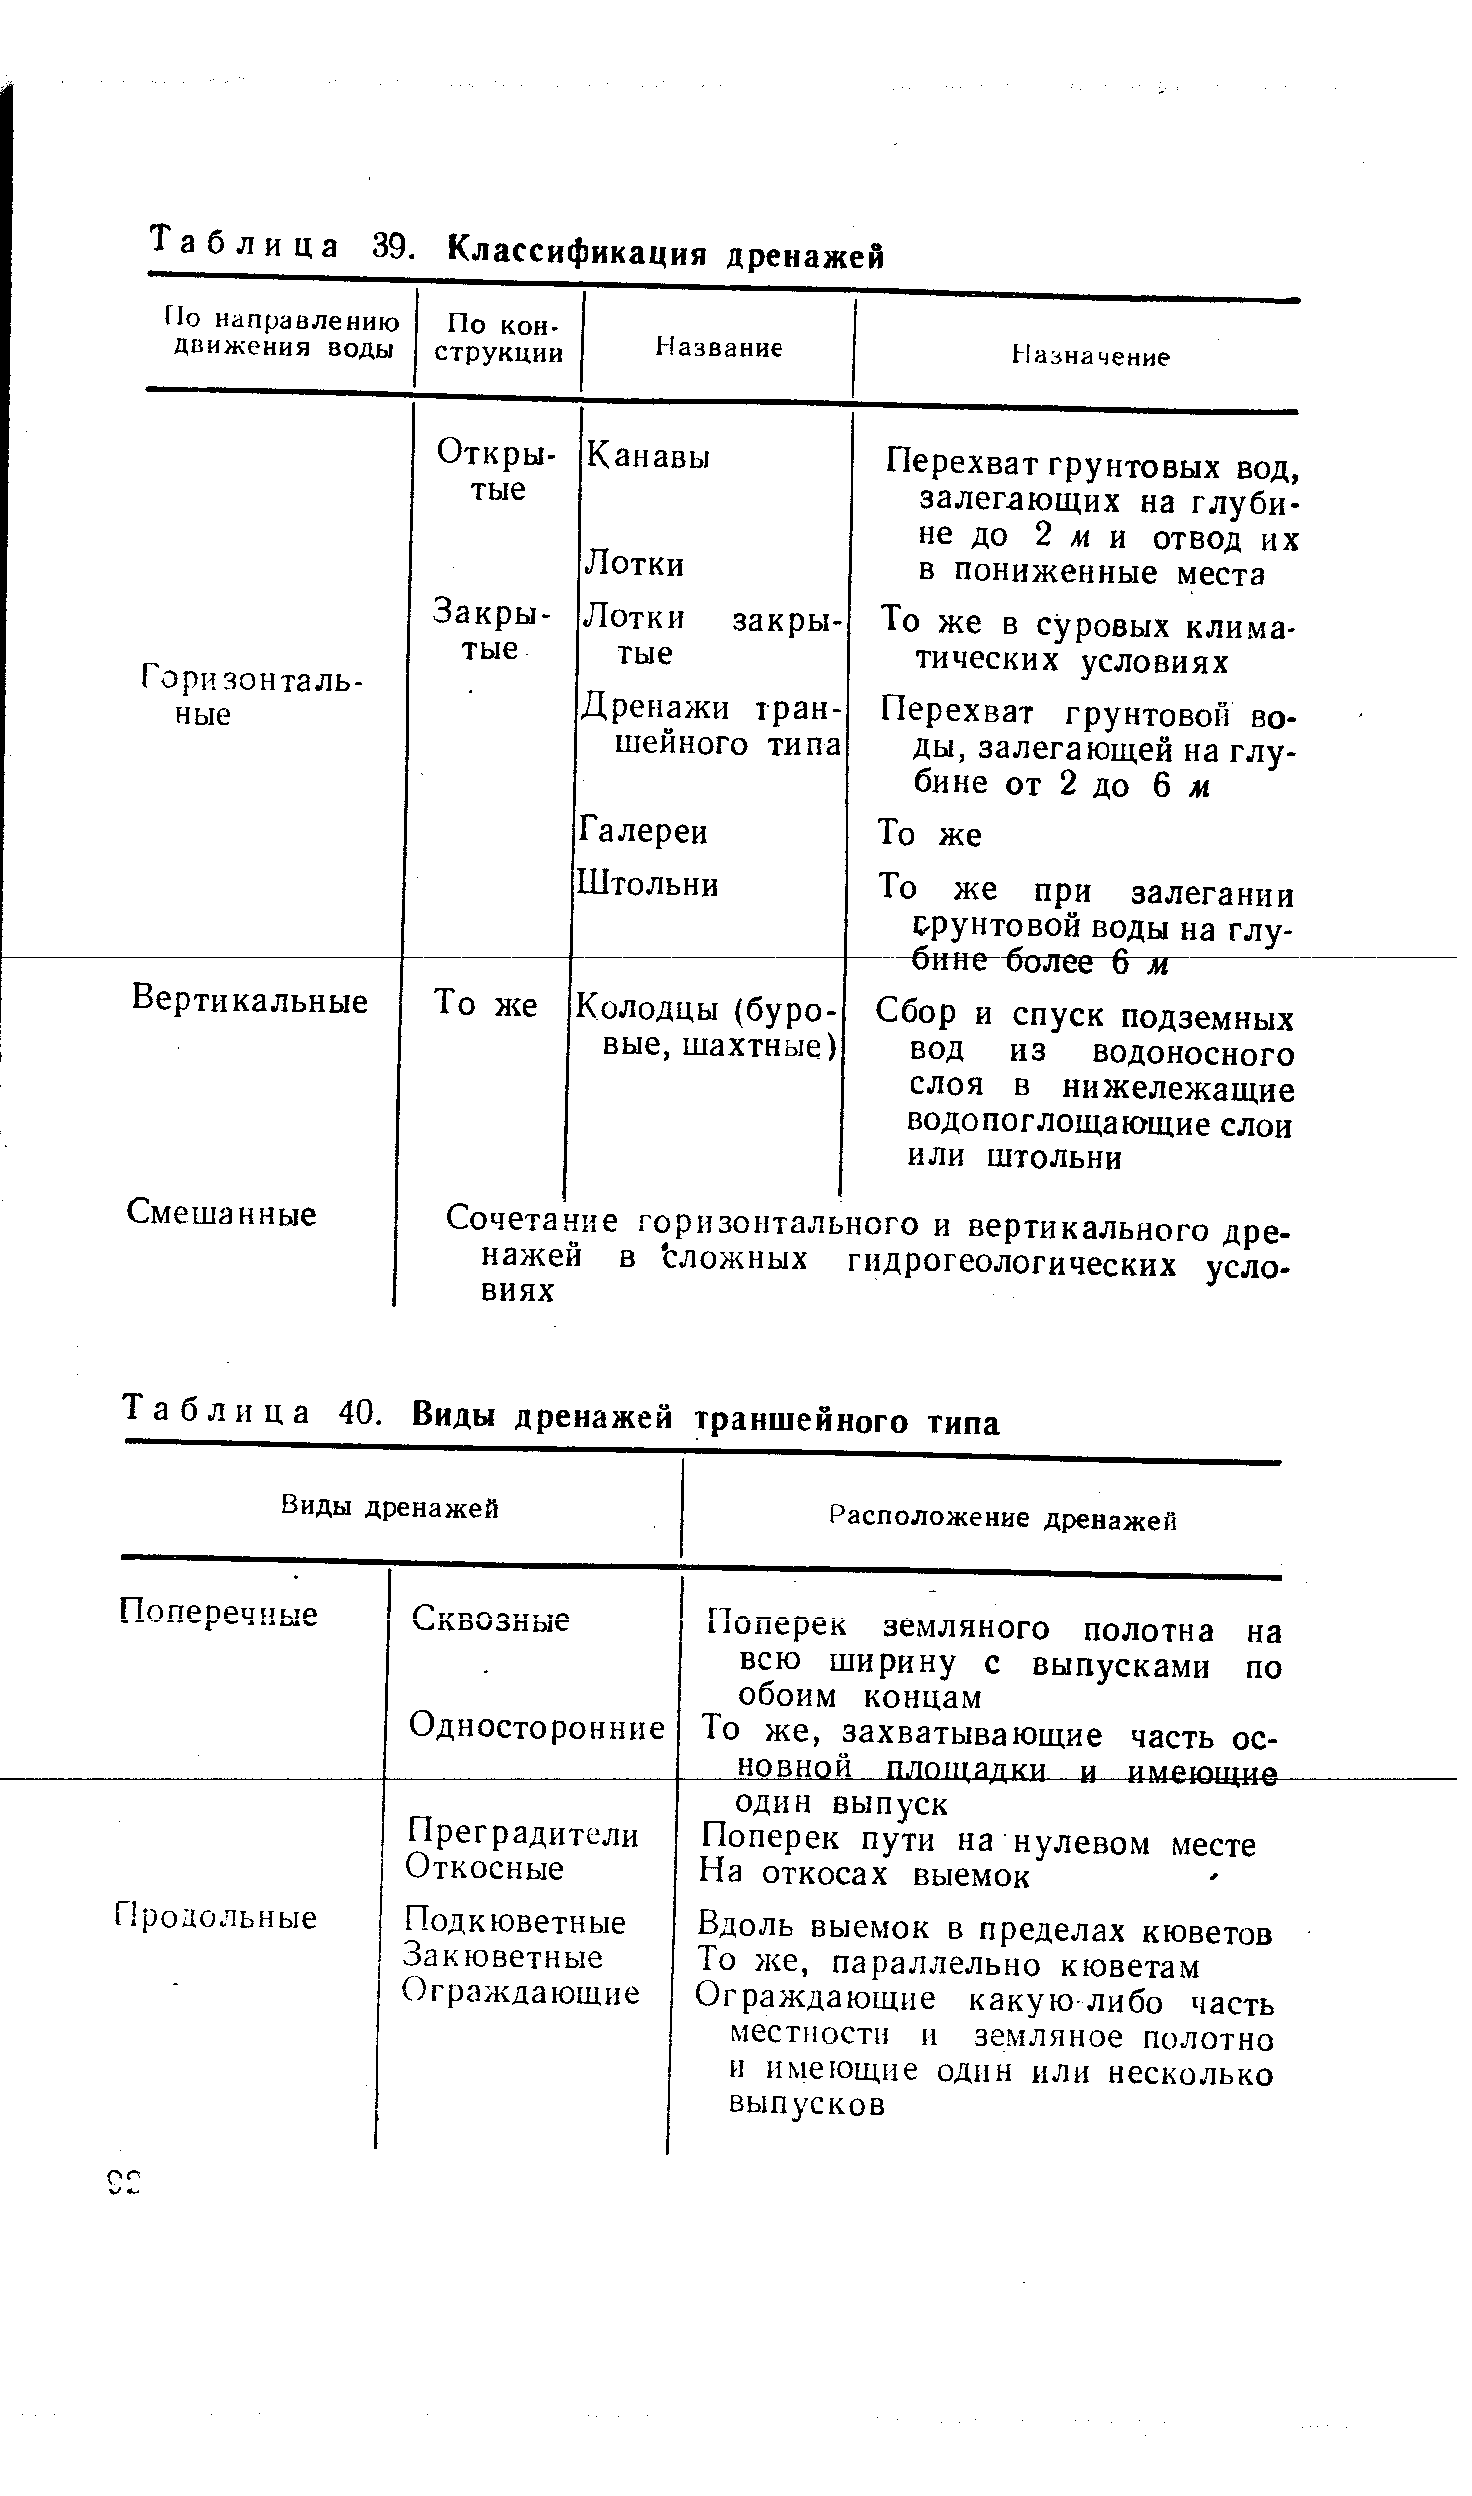 Таблица 39. Классификация дренажей
